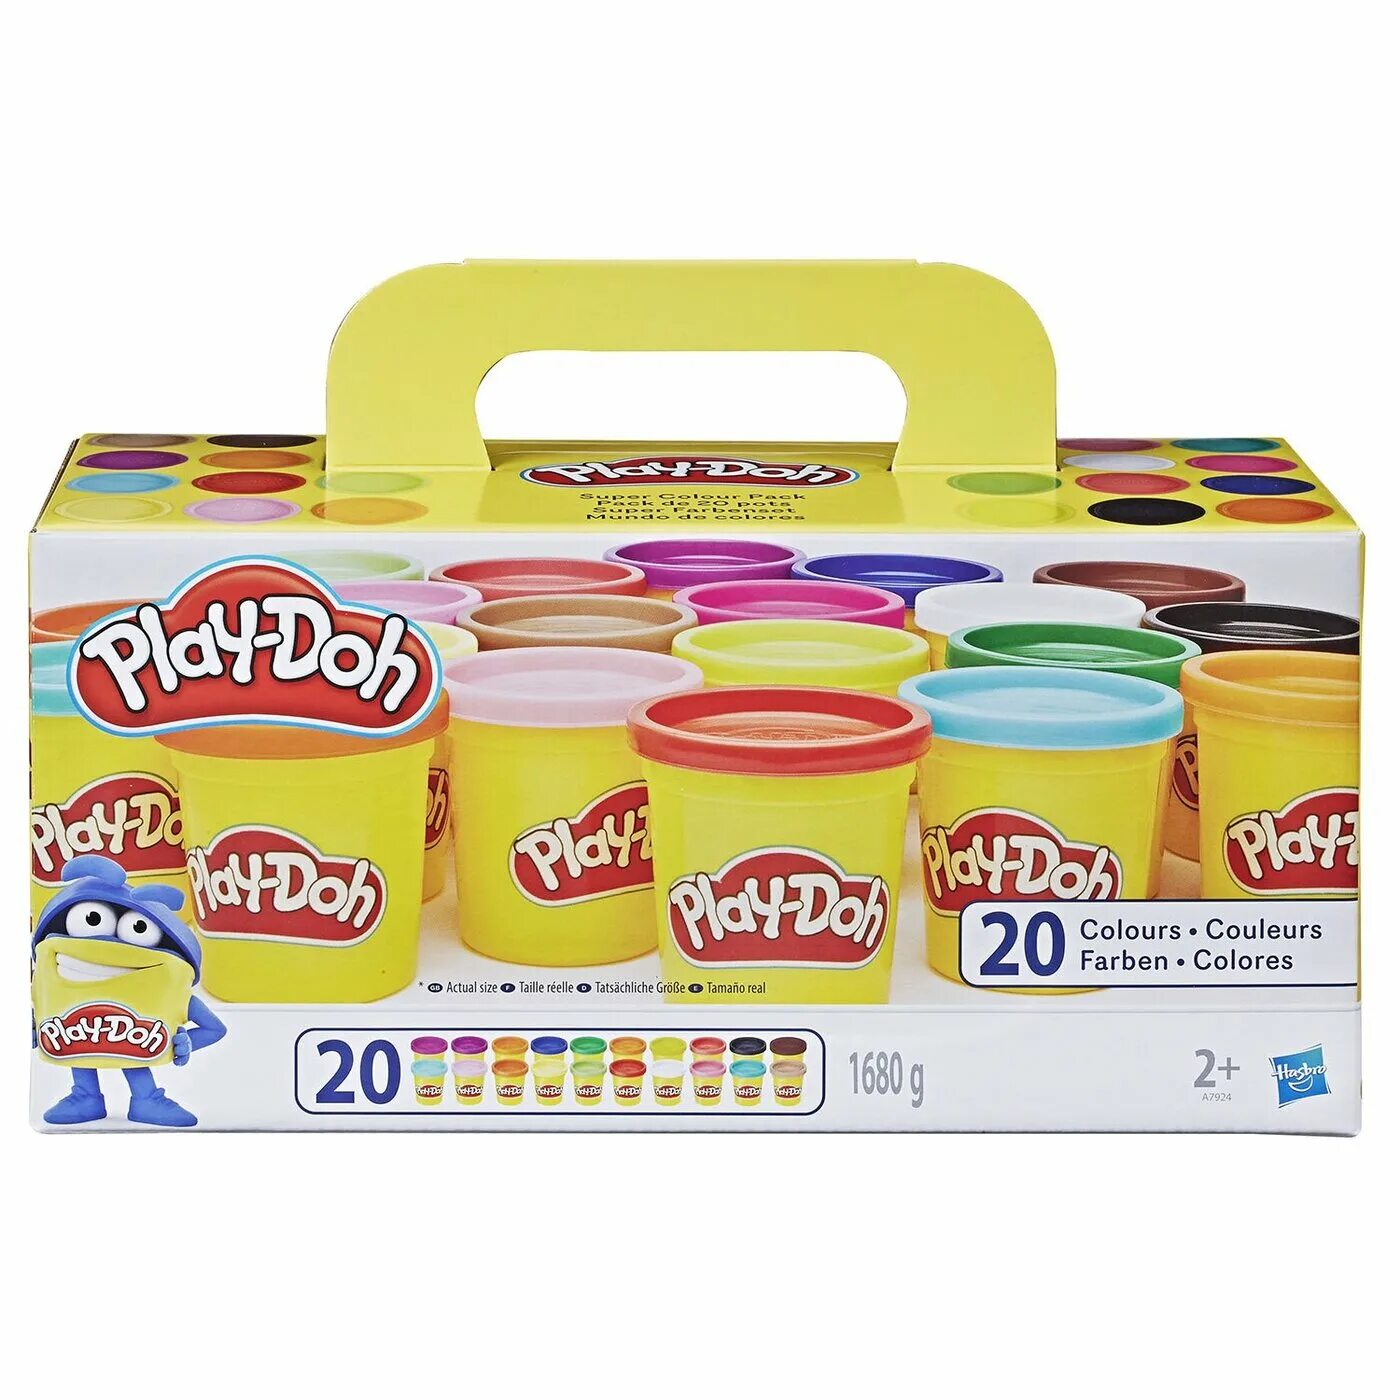 Пластилин Play-Doh 20 цветов. Плей до набор пластилина 20 банок. Набор пластилина 20 банок PD a7924. Пластилин плей до 20 банок.